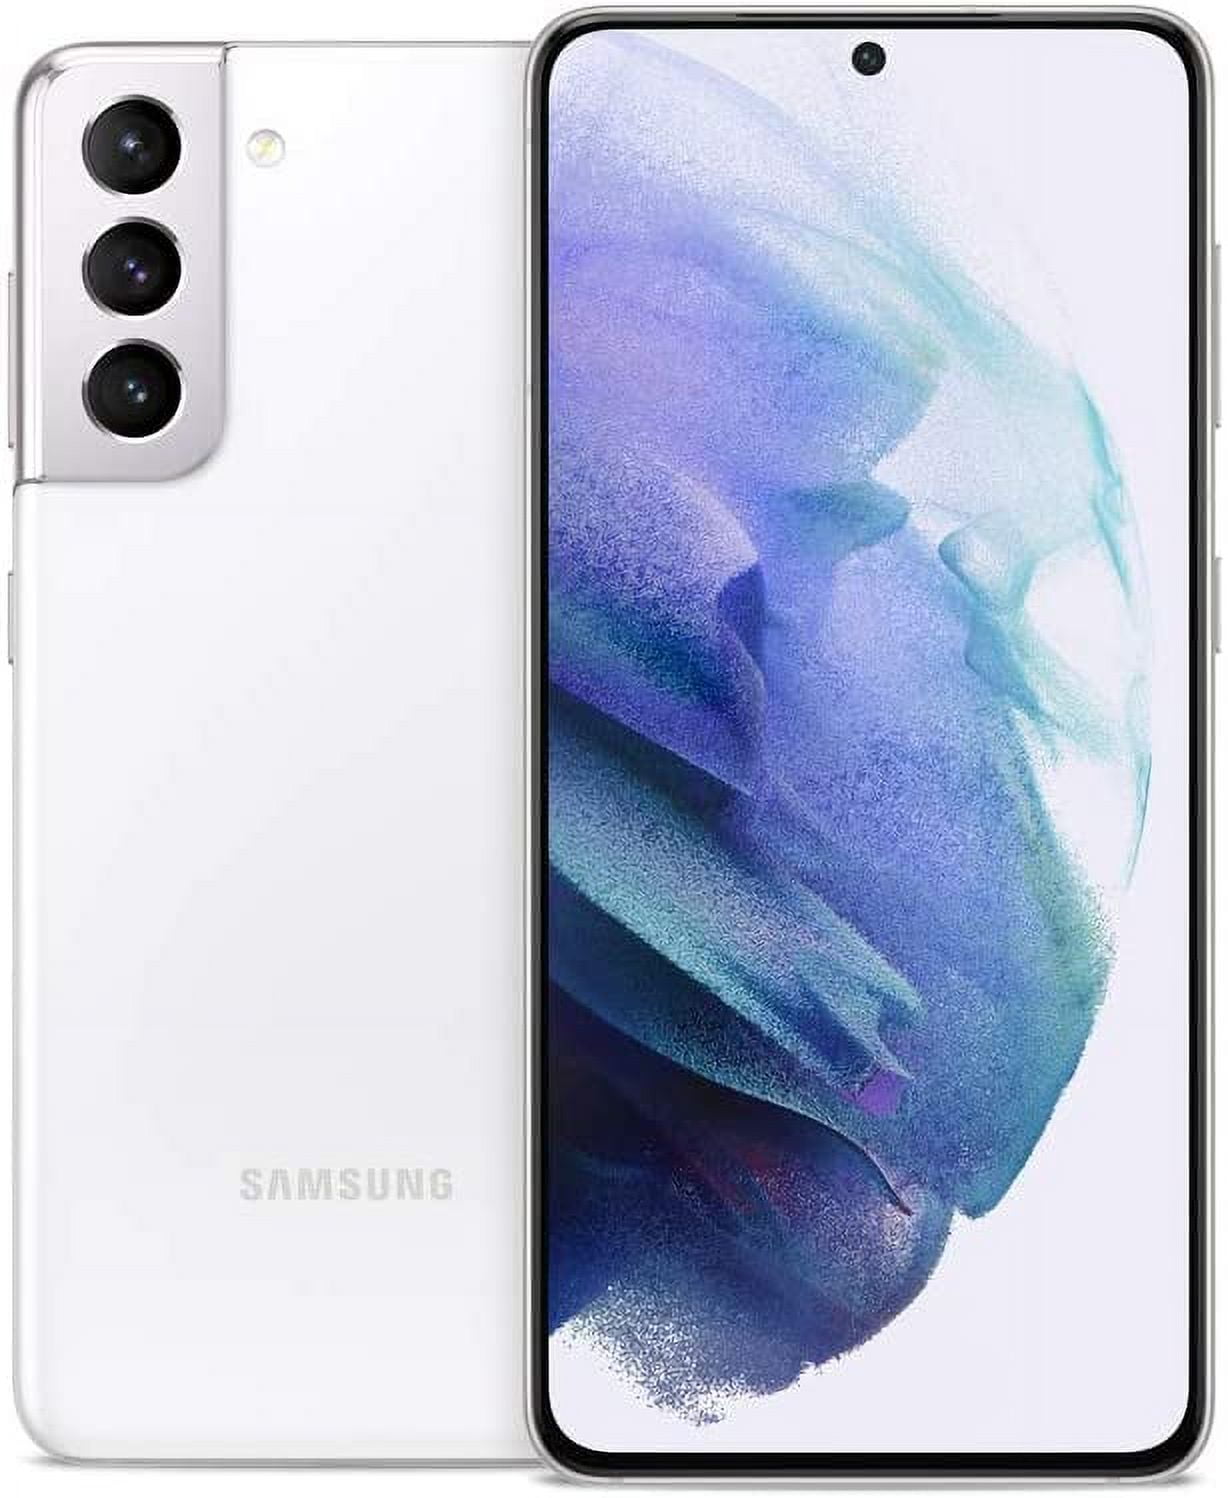 Samsung Galaxy S22 5G SM-S901U1 128GB Black (US Model) - Factory Unlocked  Cell Phone - Very Good Condition